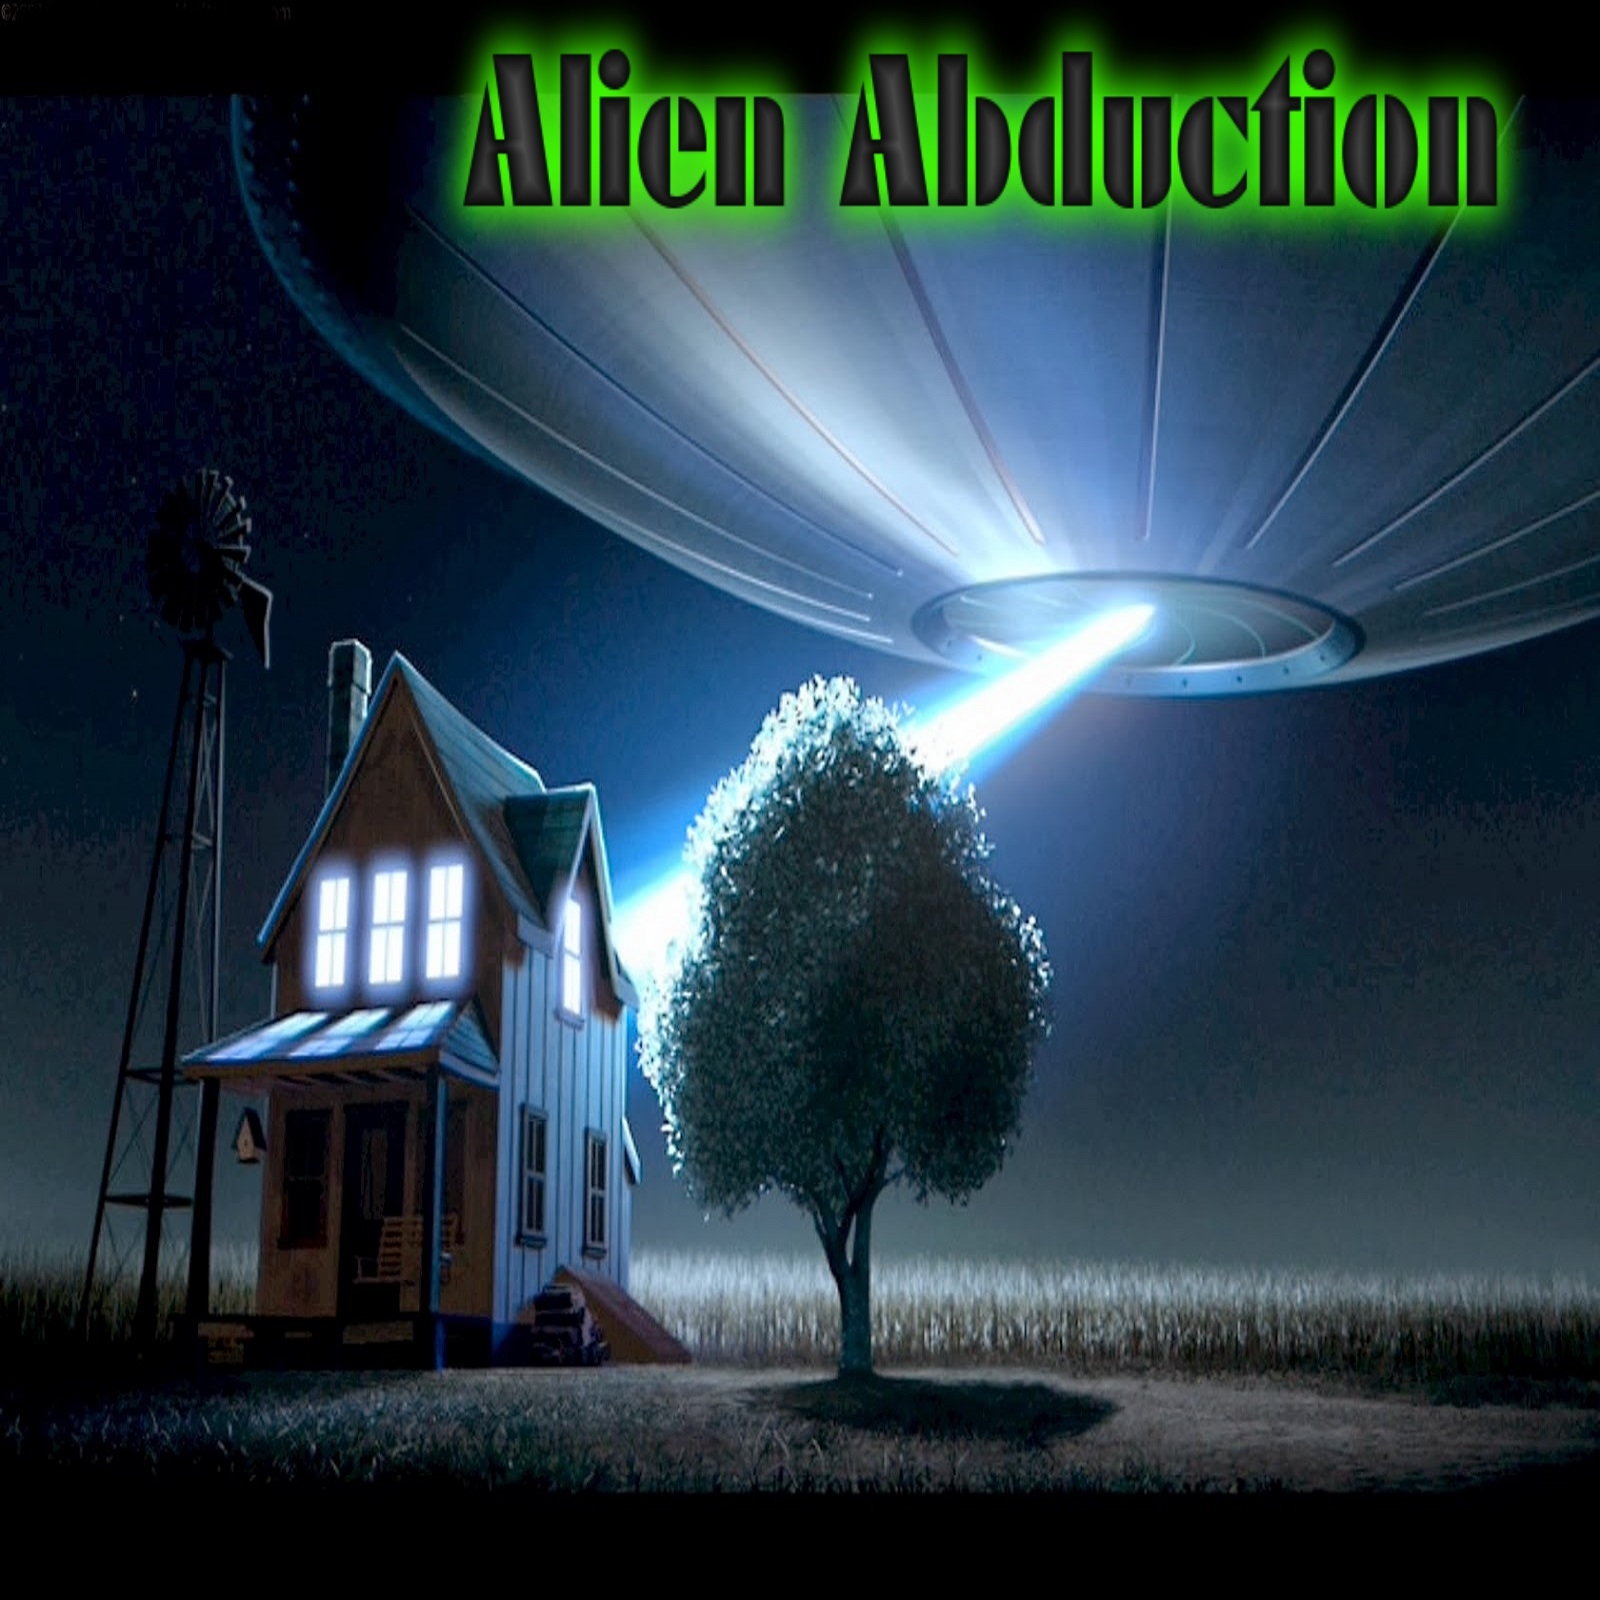 alien-abduction-escape-rooms-in-romford-hornchurch-upminster-elm-park-emerson-park-gidea